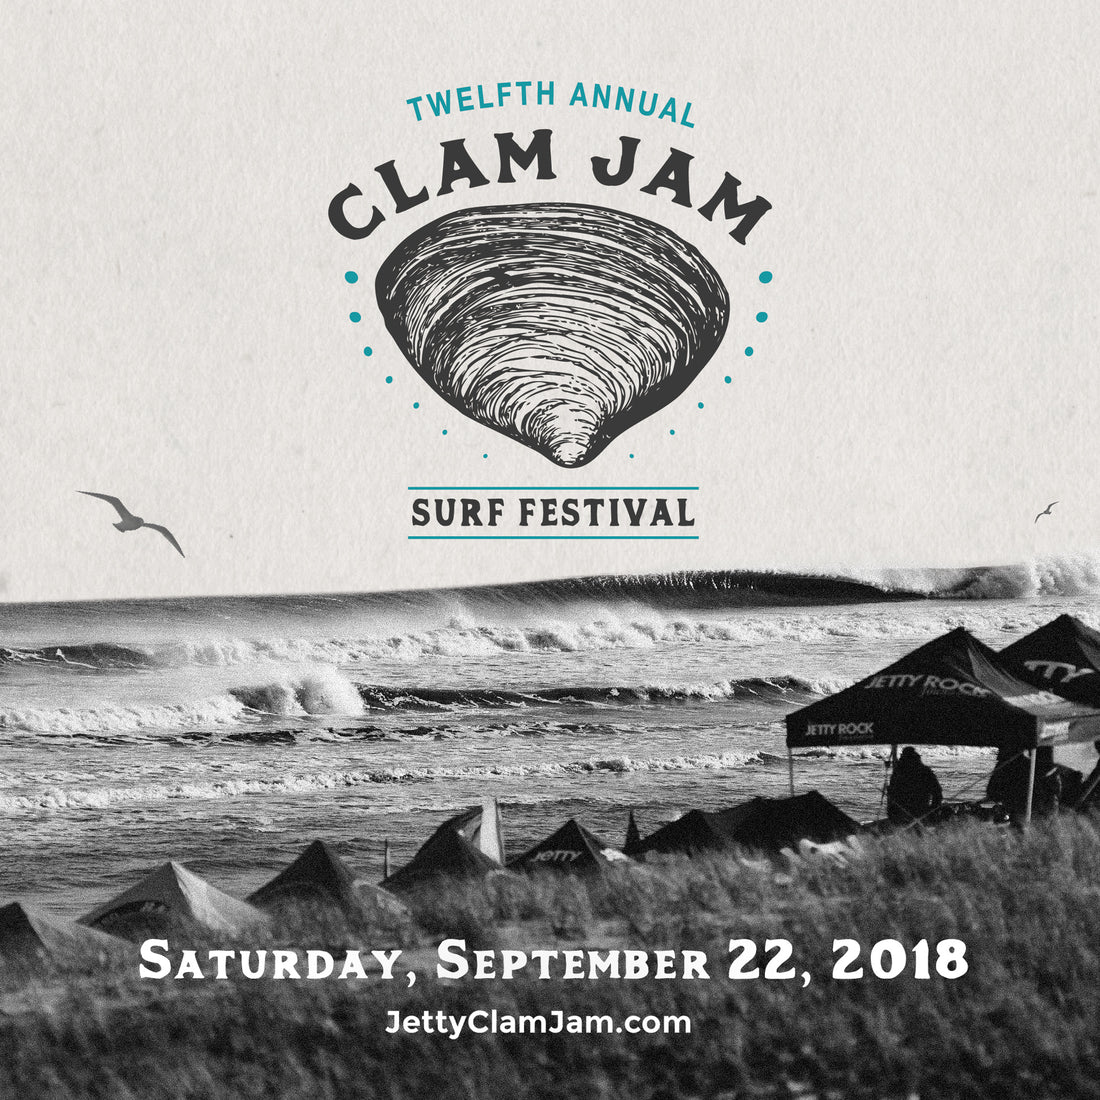 Clam Jam Selection Night